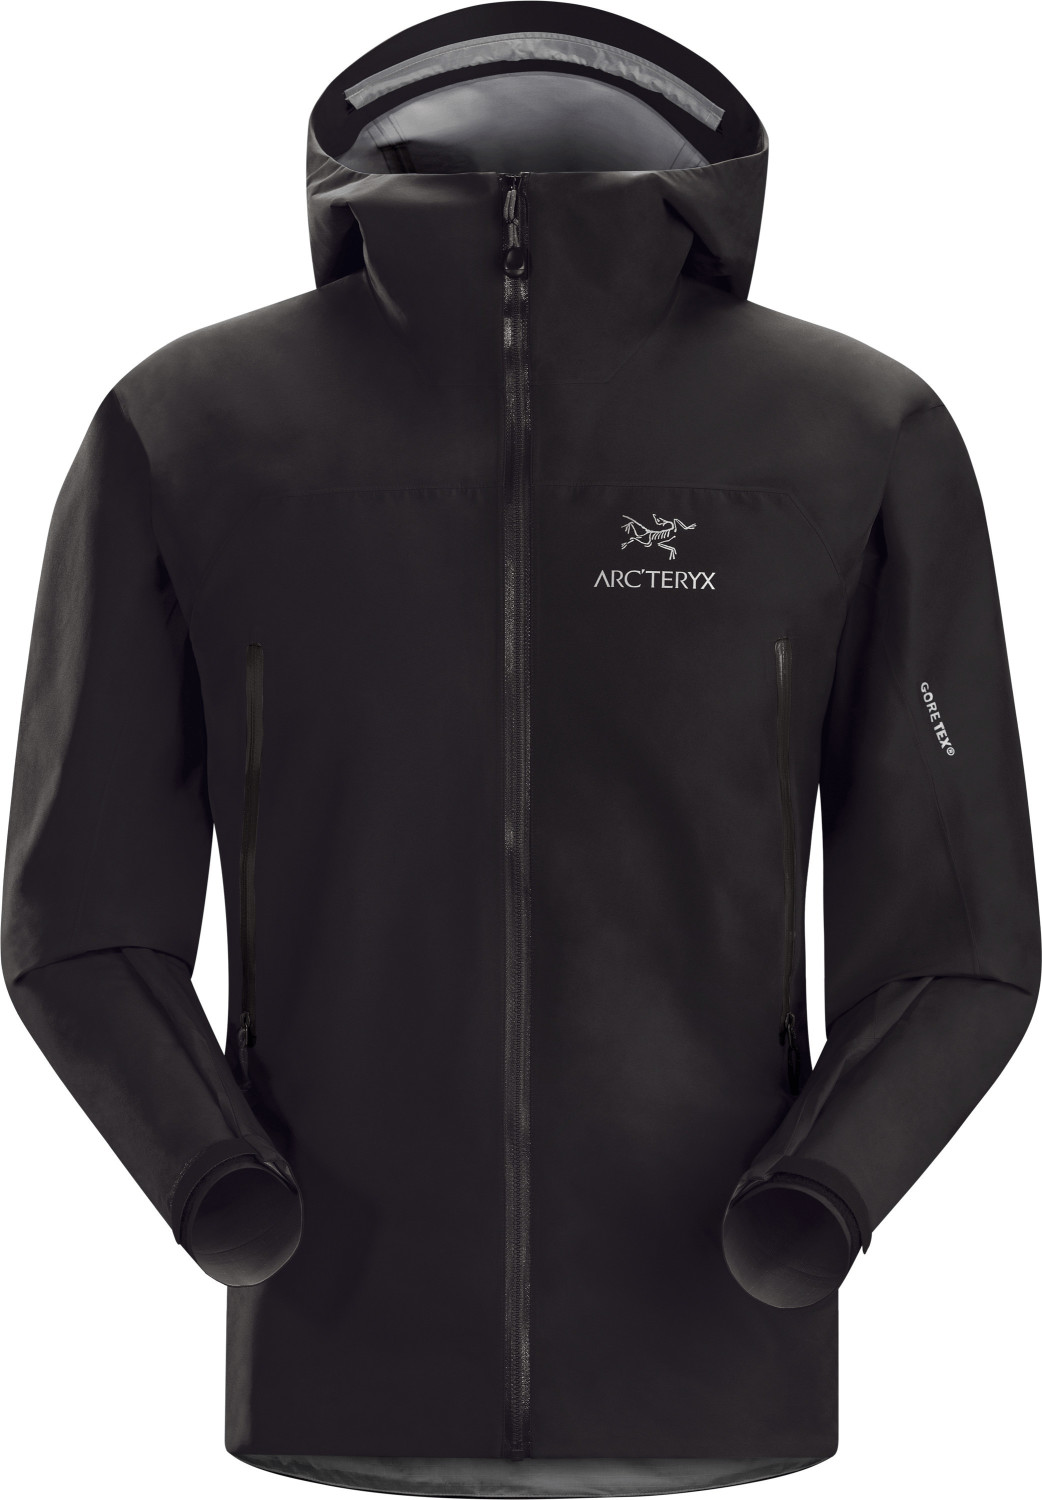 Arc'teryx Zeta LT Jacket Men's black ab 349,00 € | Preisvergleich bei